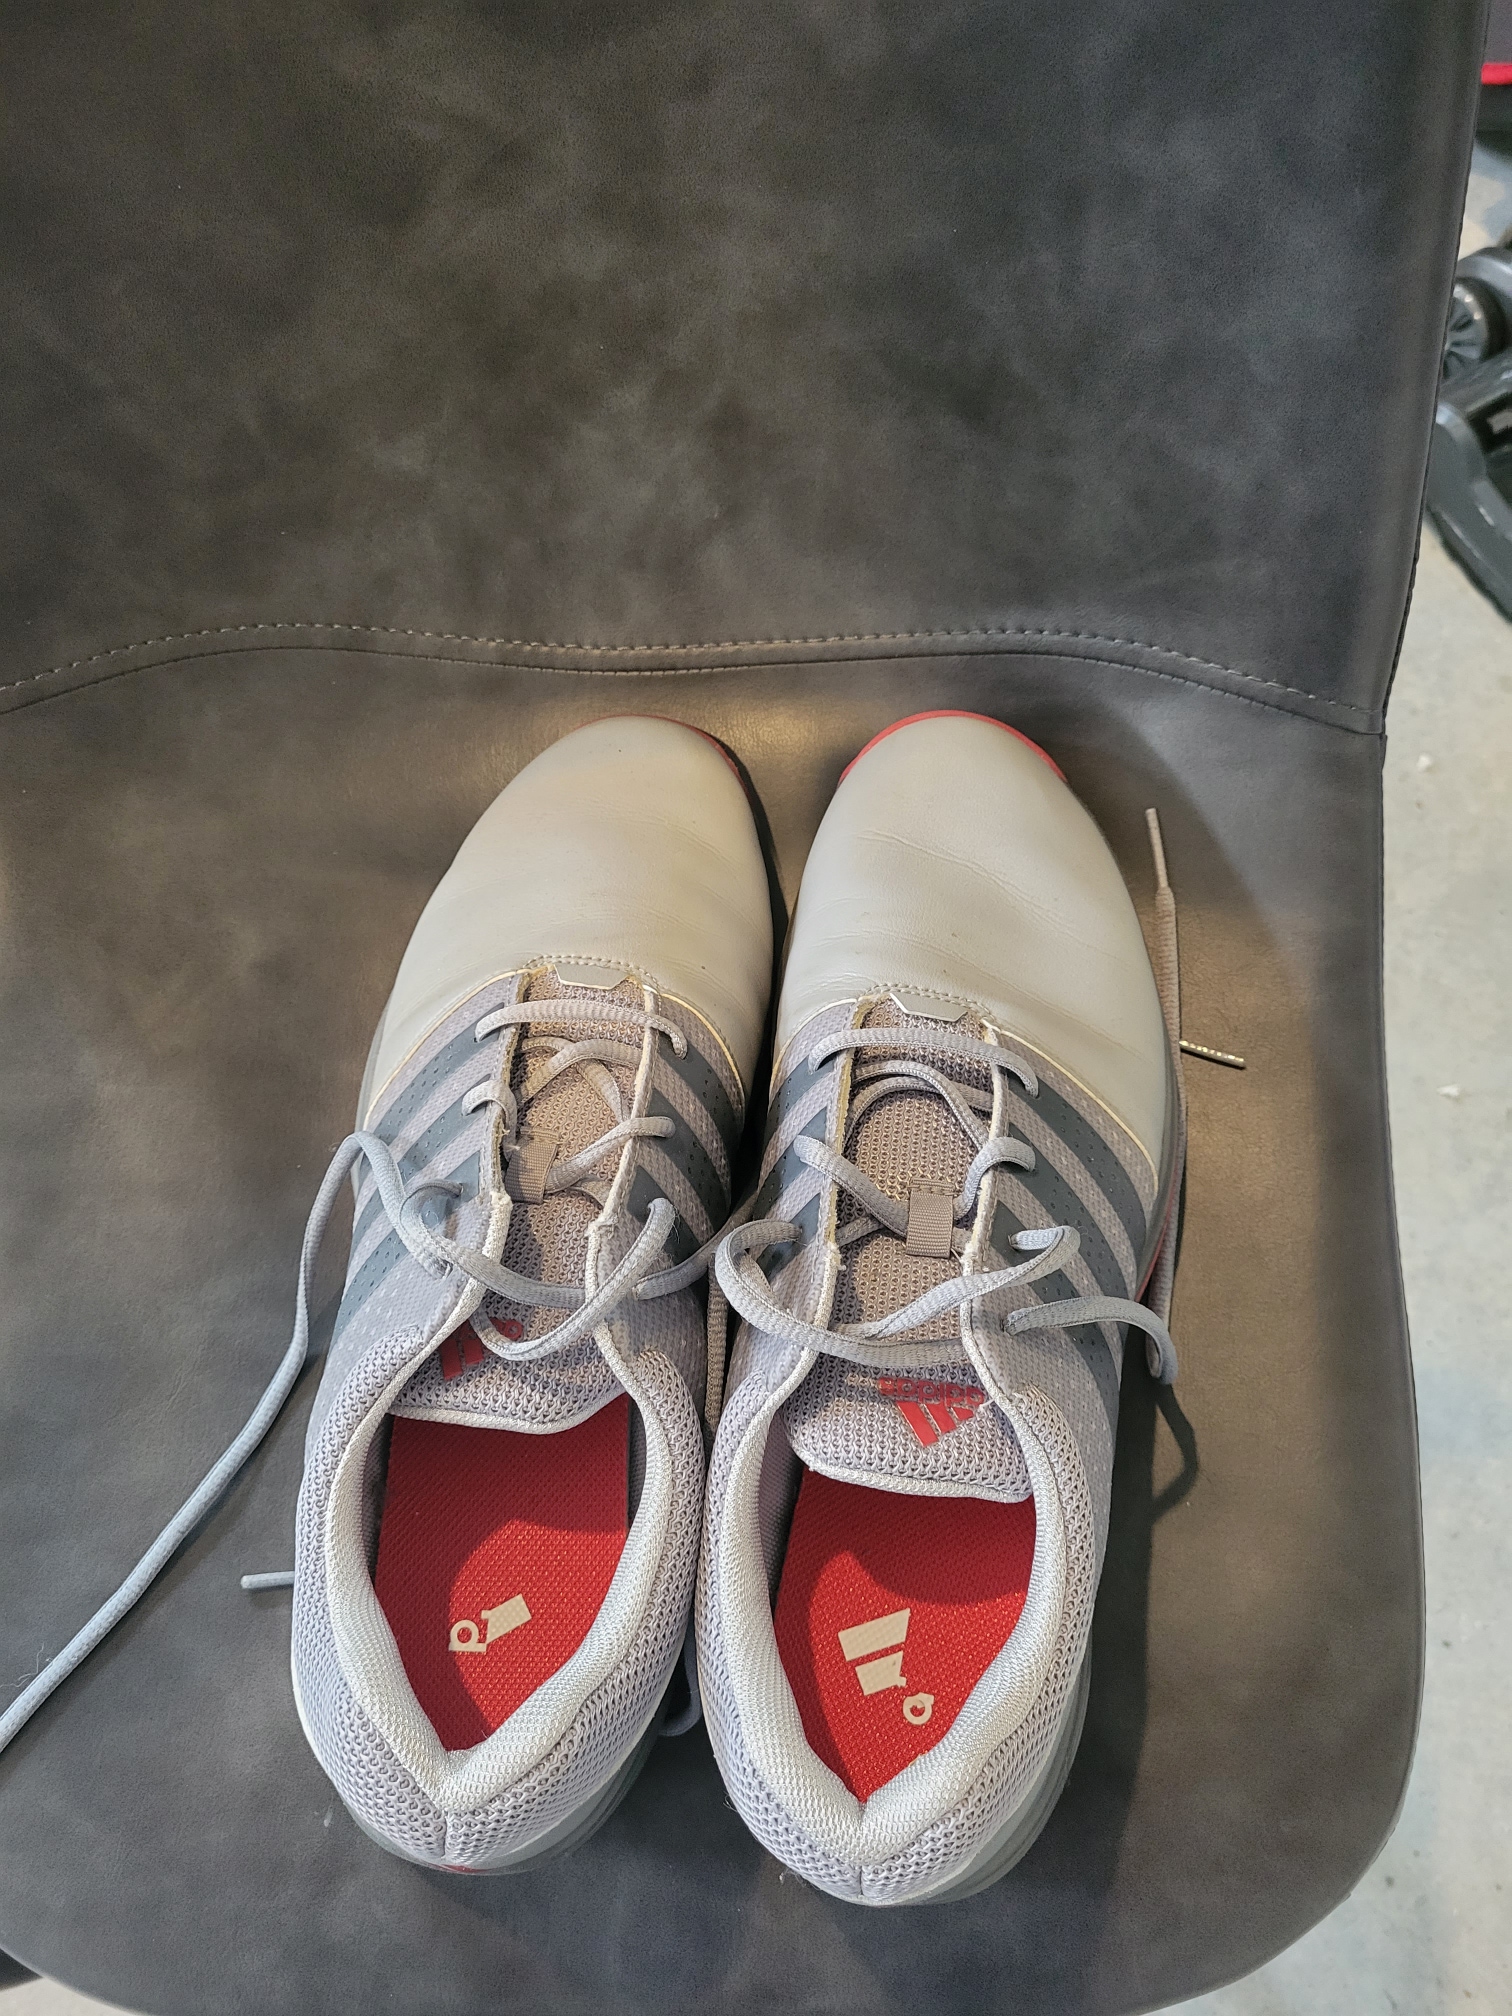 New Men's Size 12.5 (Women's 13.5) Adidas Golf Shoes